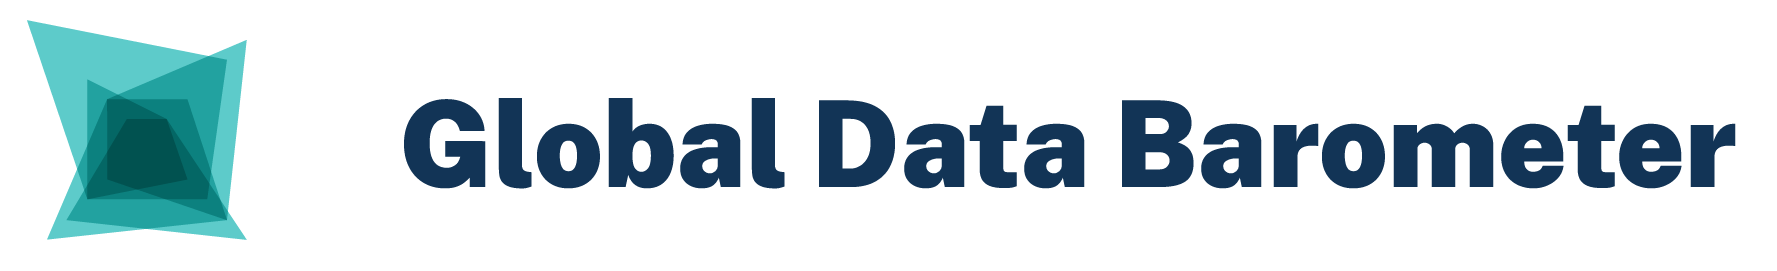 Global Data Barometer Logo 